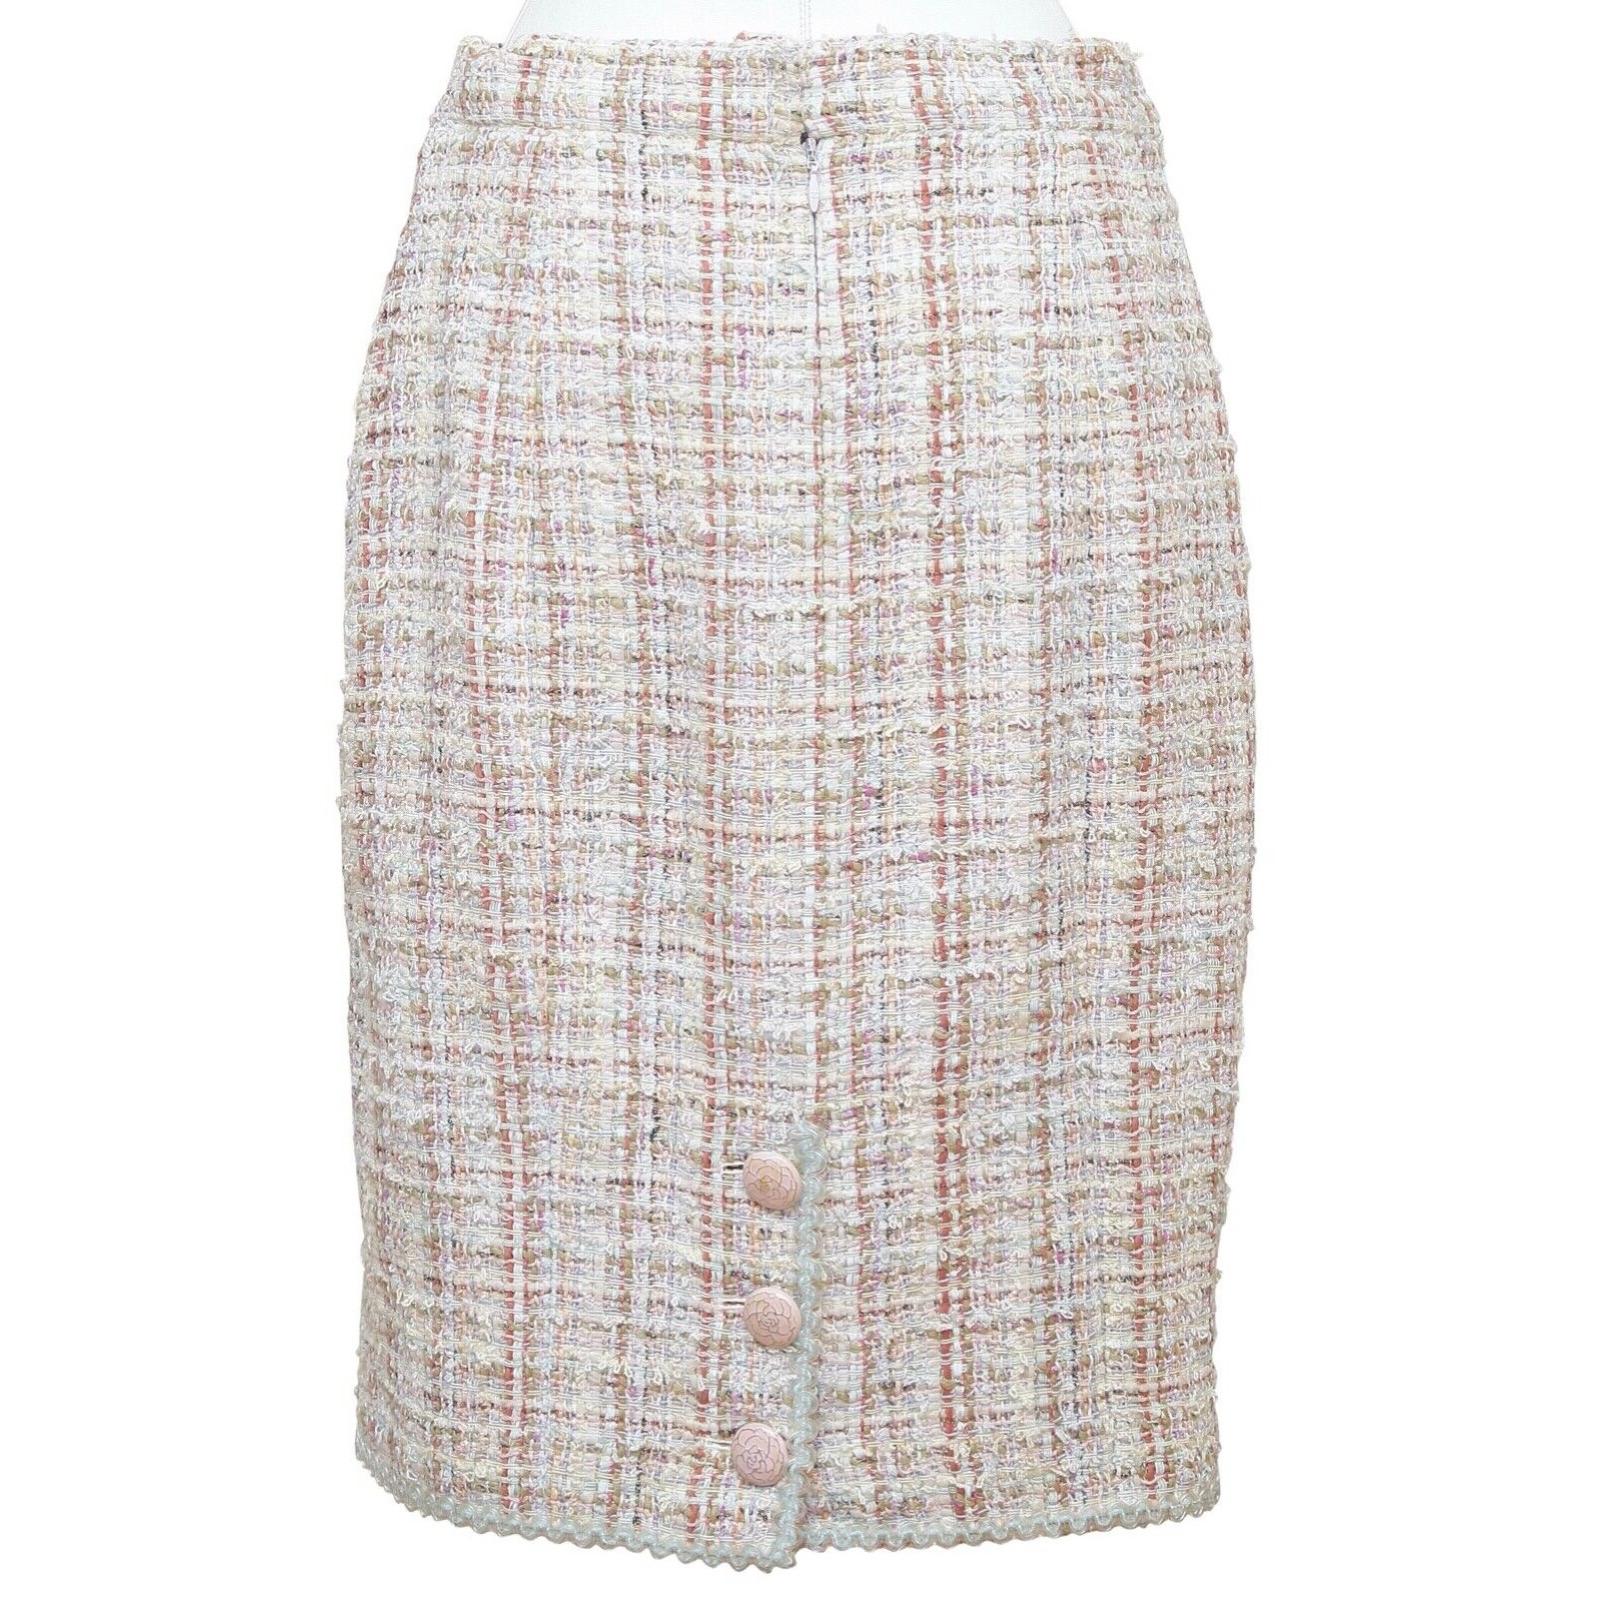 CHANEL Tweed Skirt Fantasy Multi-Color Camellia Cotton 2013 RUNWAY SZ 40 For Sale 1